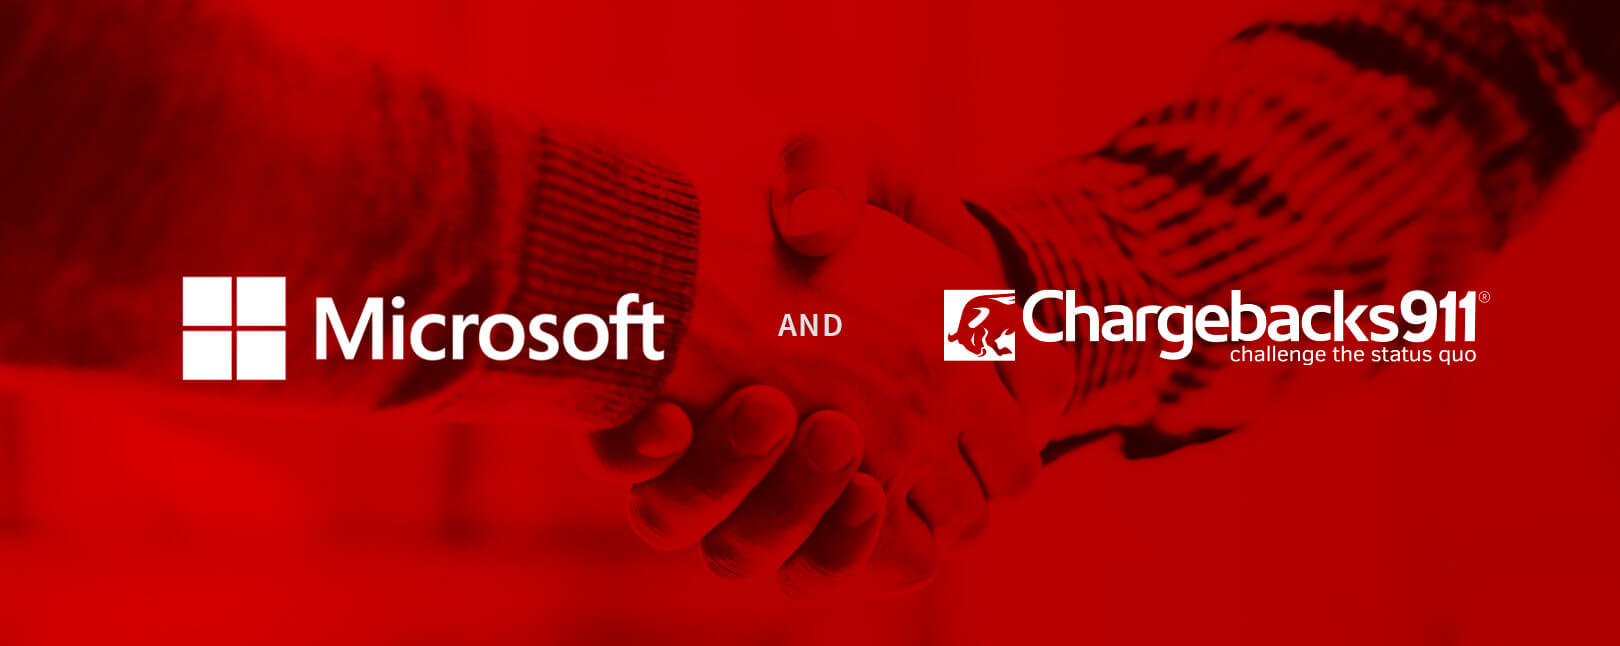 Chargback911 and Microsoft - Credit Chargeback911